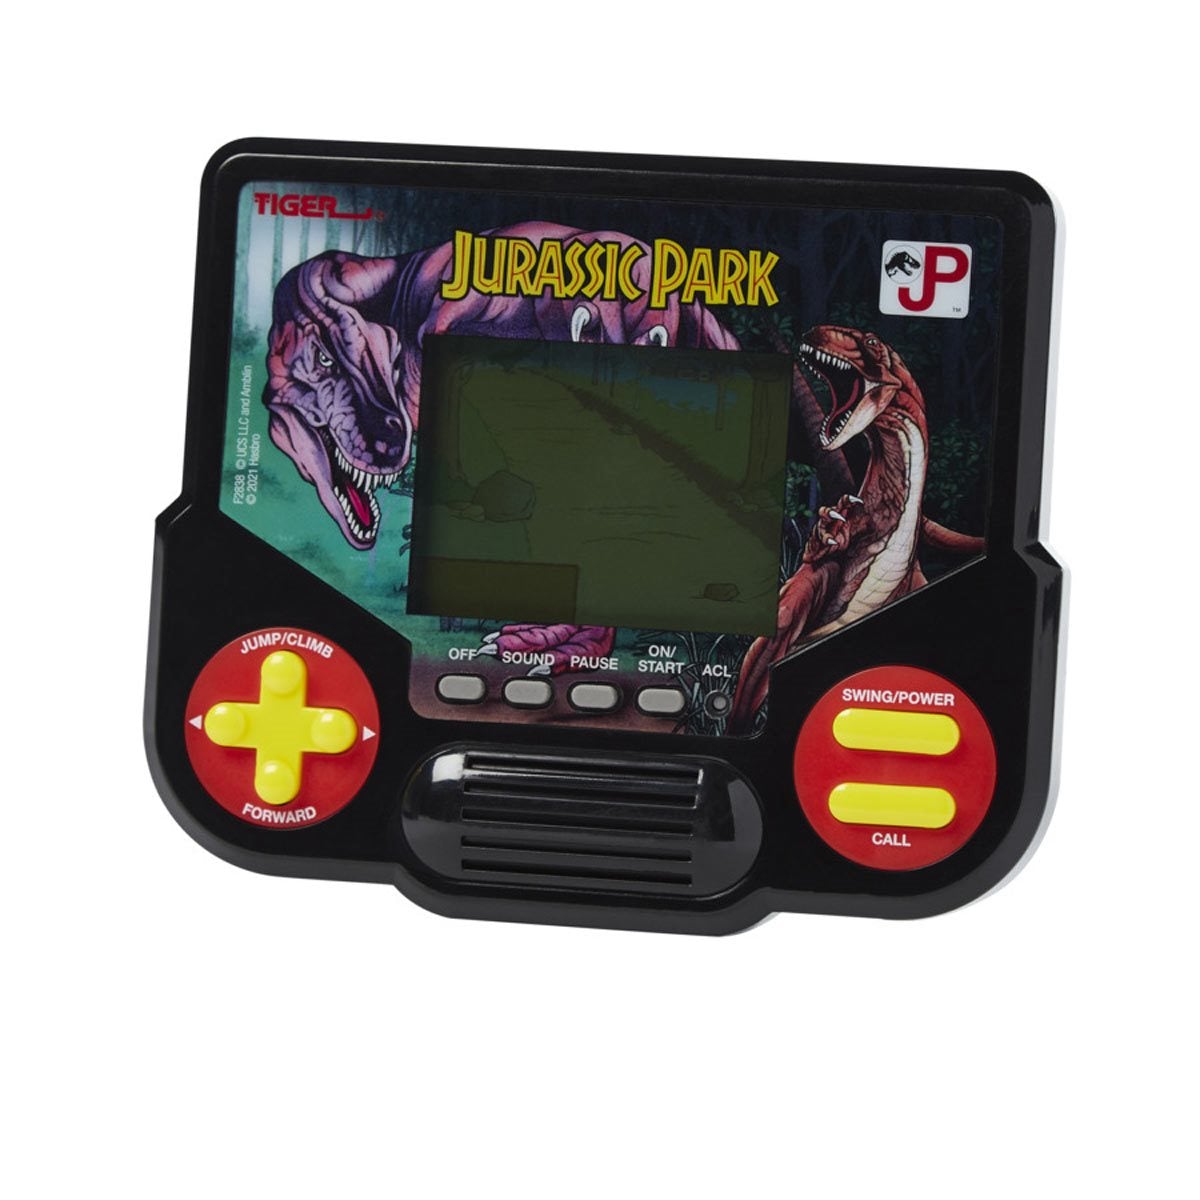 Jurassic Park: Tiger Electronics Handheld Video Game - 